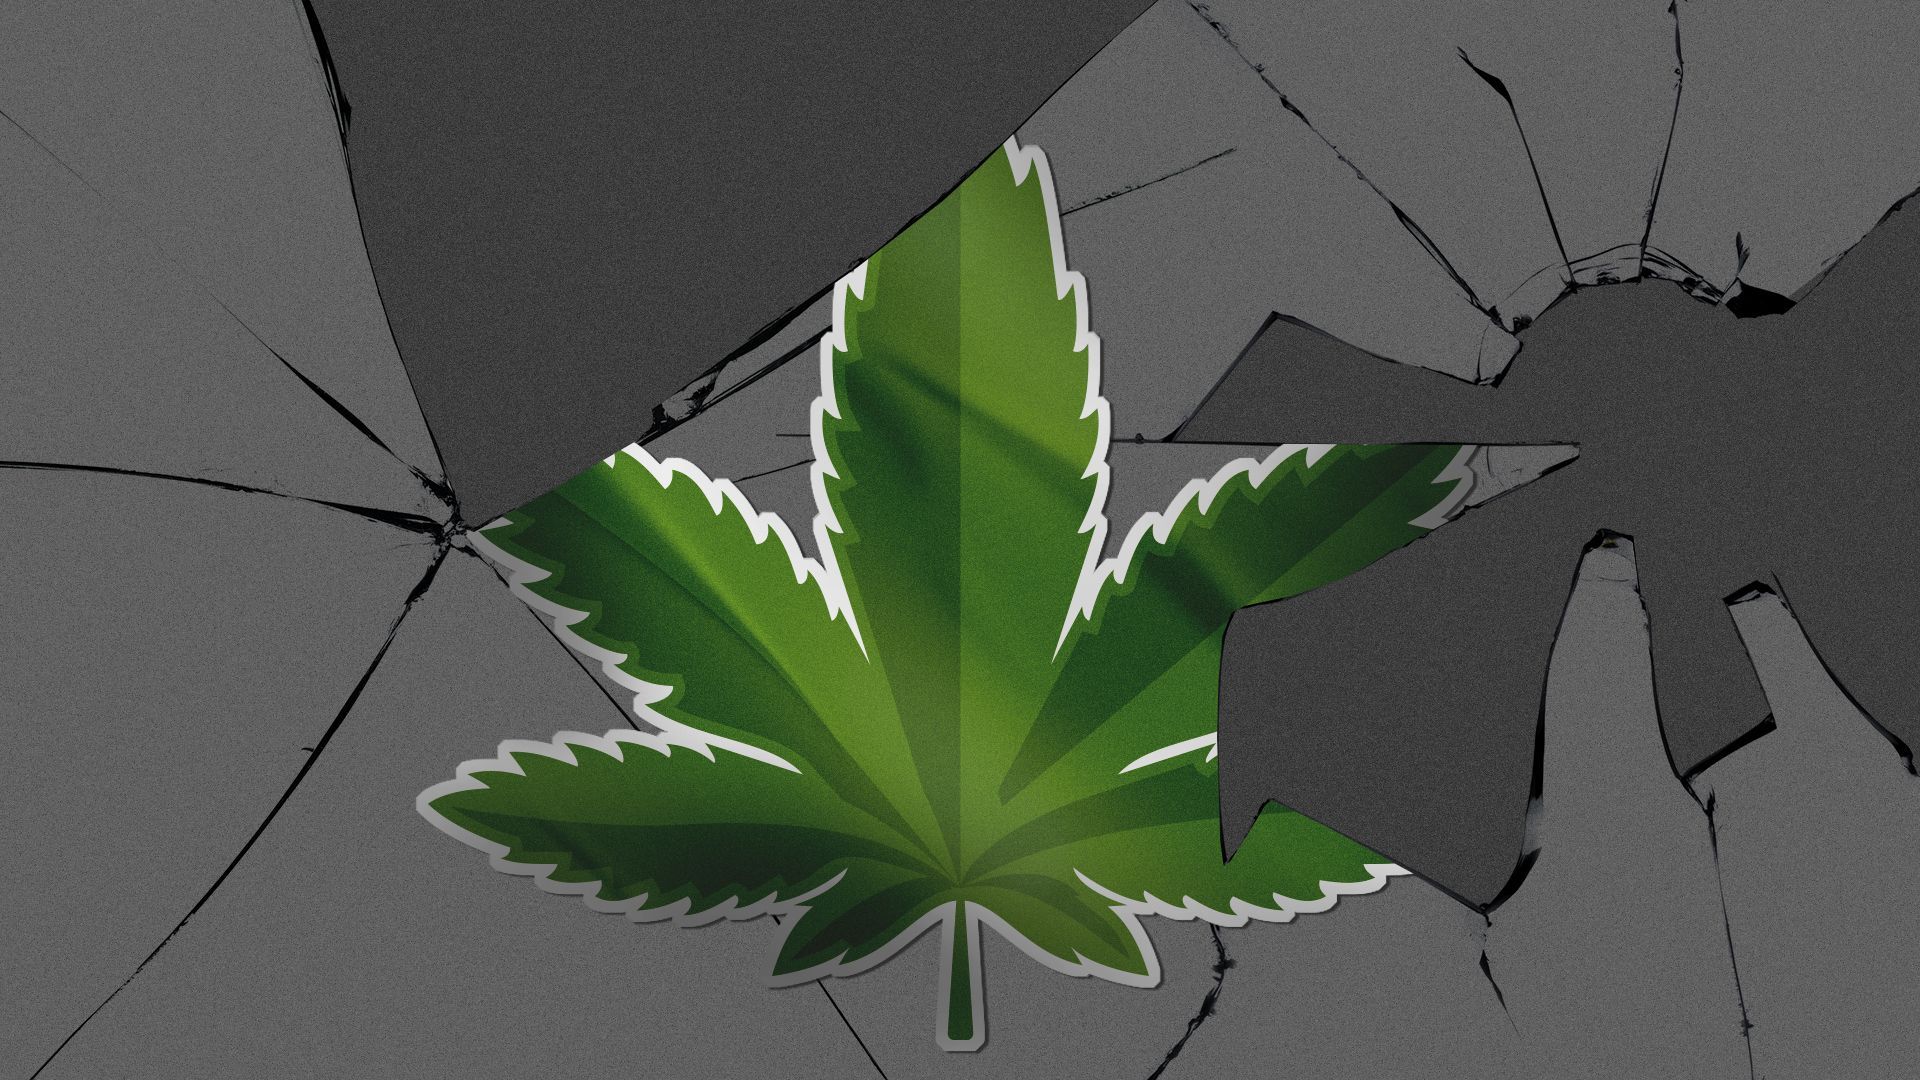 Illustration of a cannabis leaf decal on a broken window.